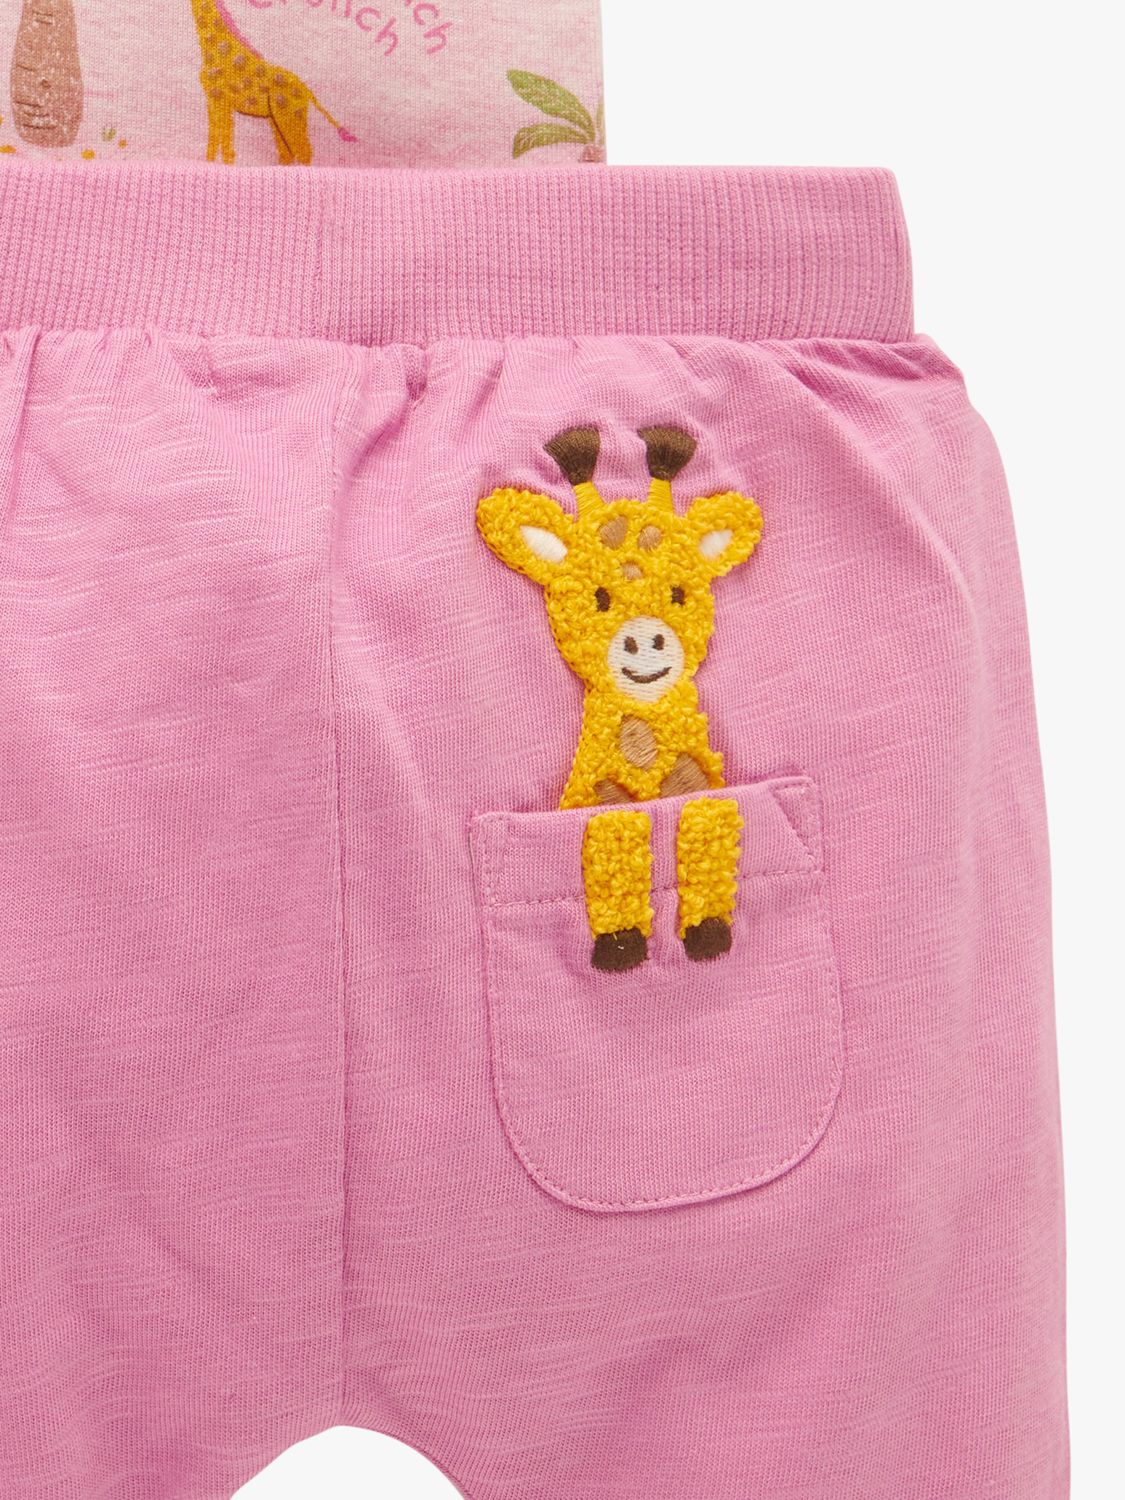 Purebaby Baby Organic Cotton Giraffe Print Top & Leggings Set, Pink, 3-6 months